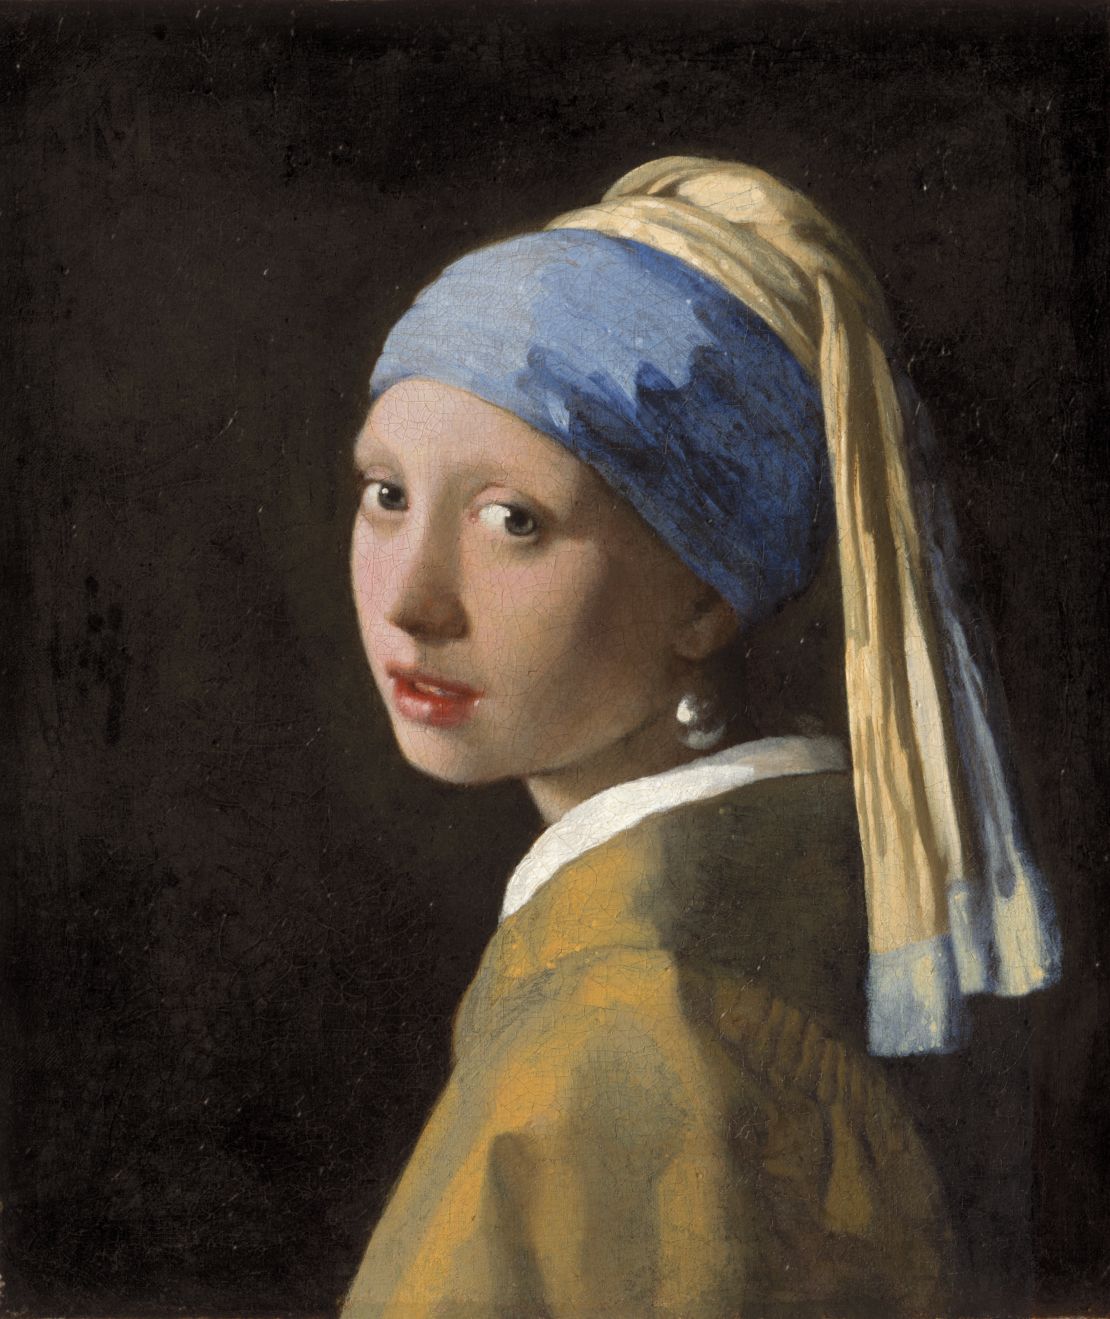 Johannes Vermeer, Girl with a Pearl Earring, c. 1665